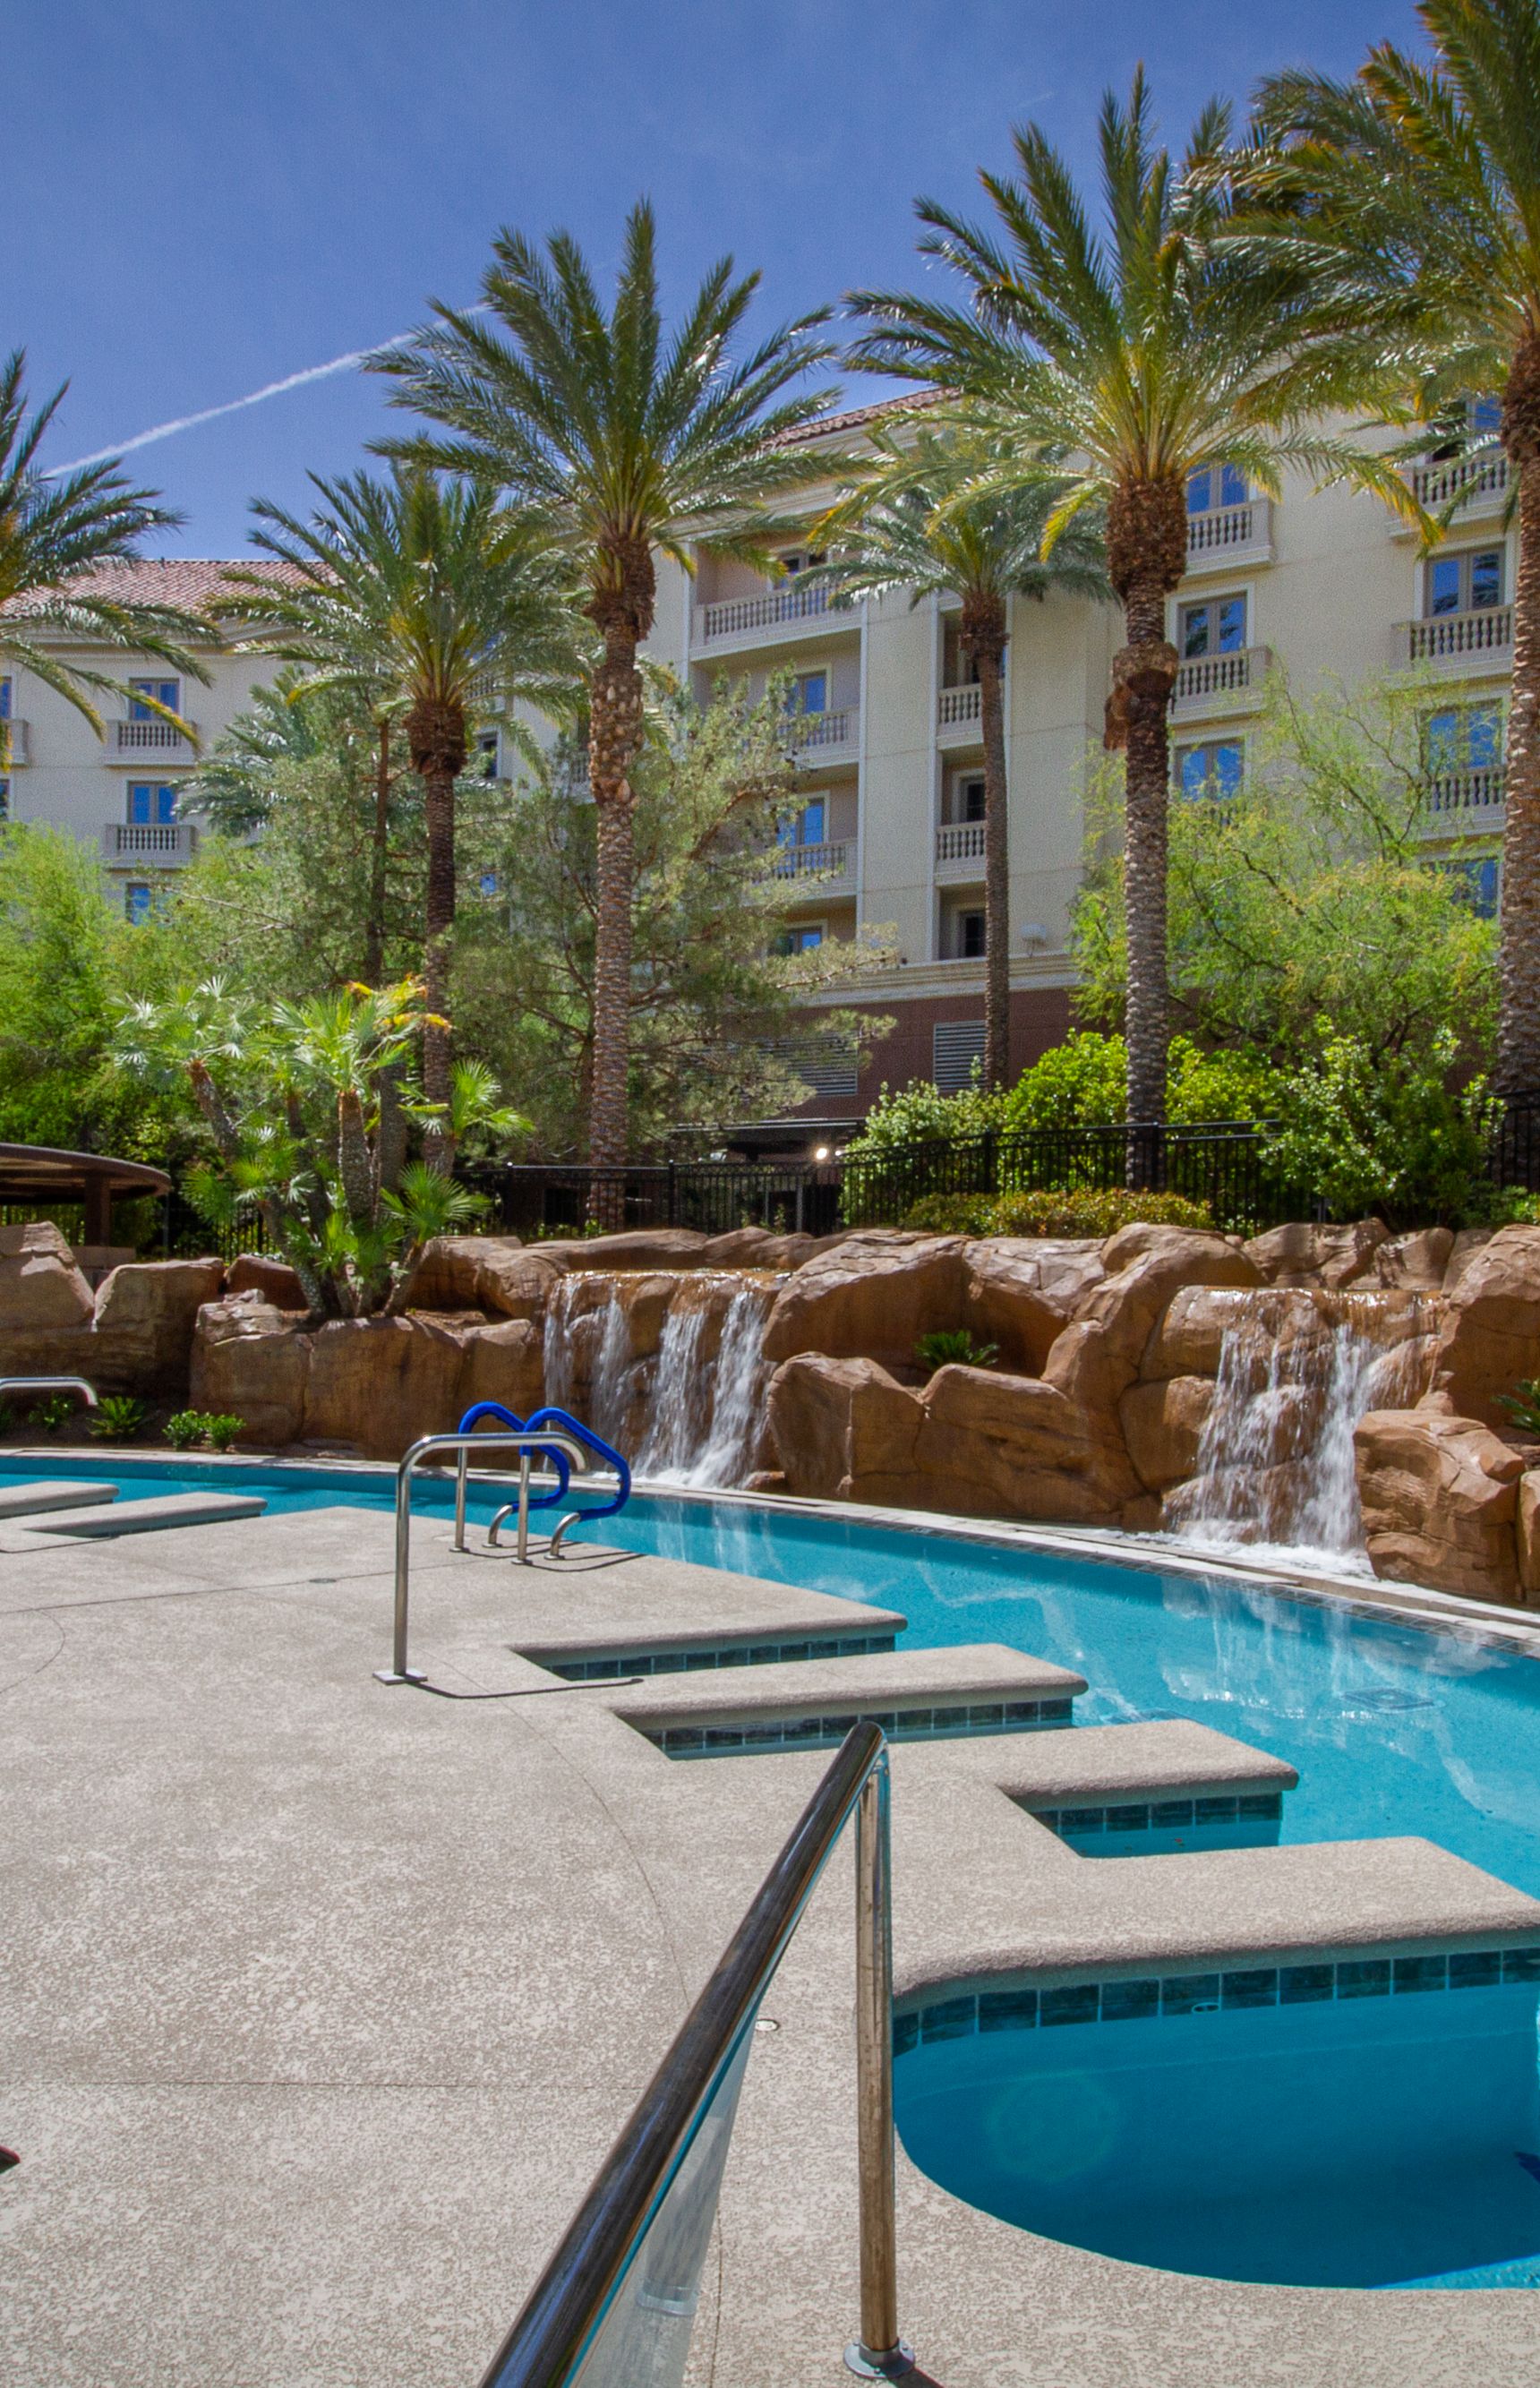 JW Marriott Las Vegas Resort & Spa - A traditional and elegant